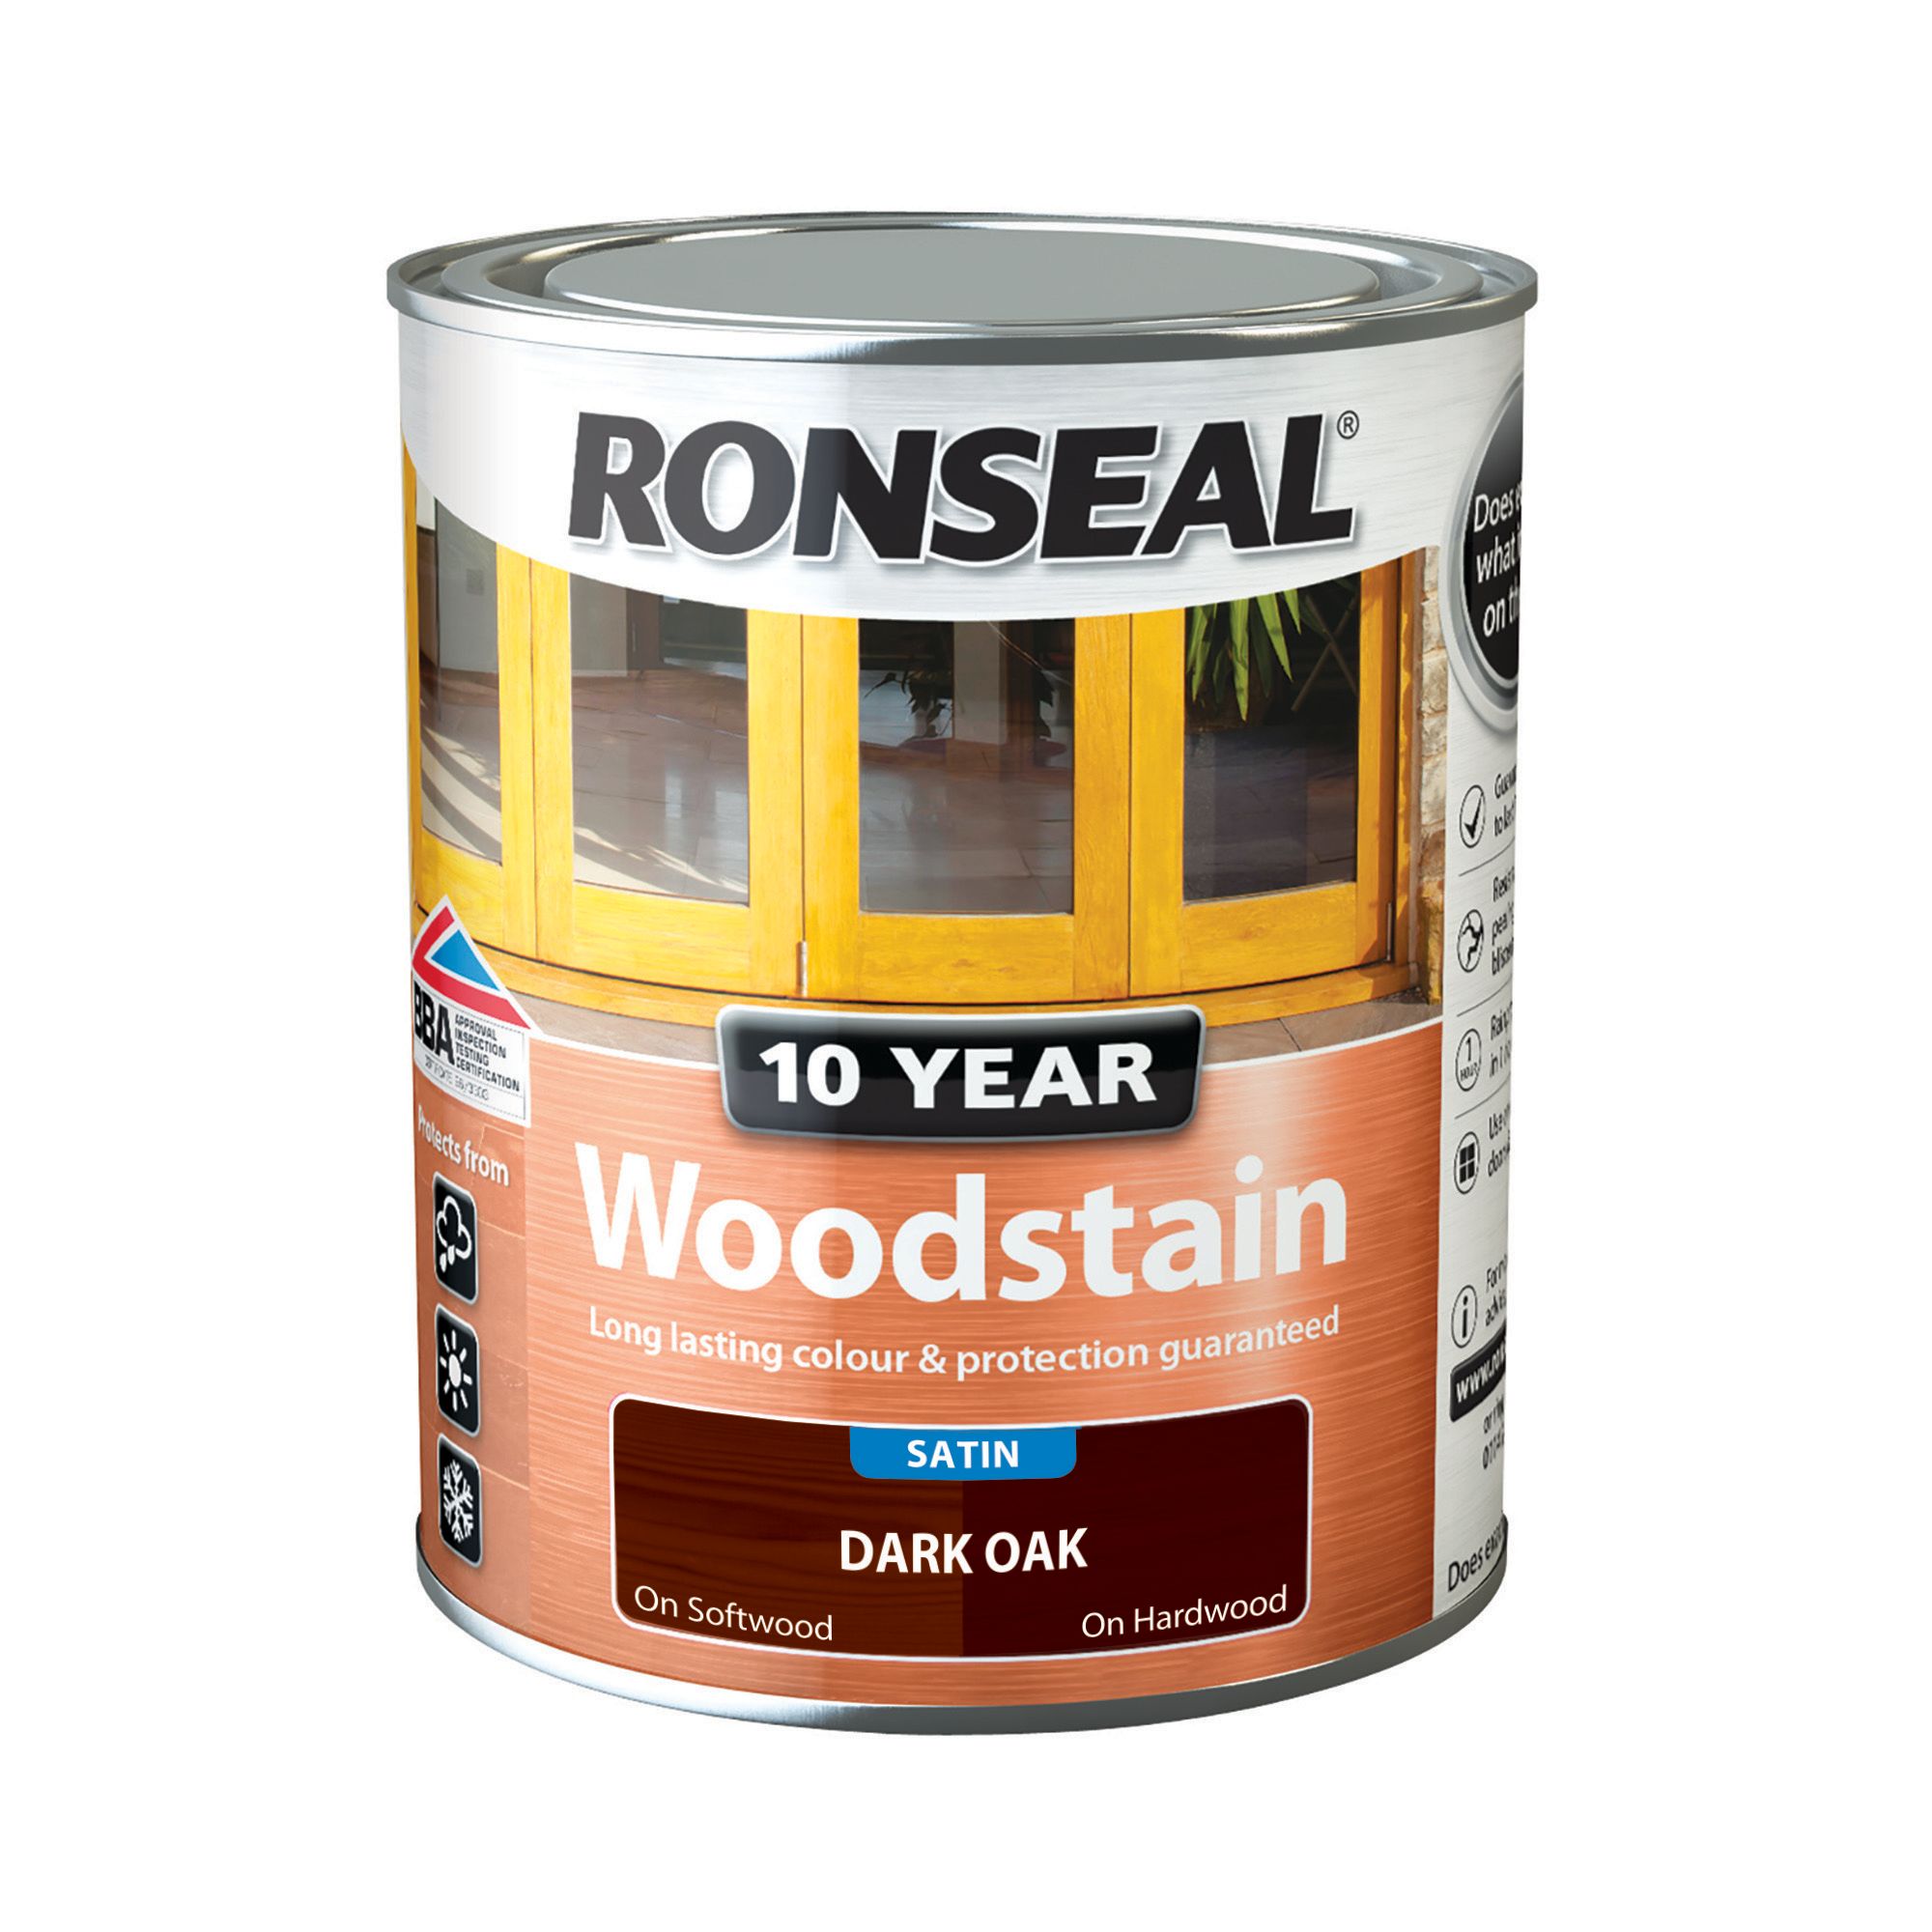 Image of Ronseal 10 Year Woodstain - Dark Oak 750ml